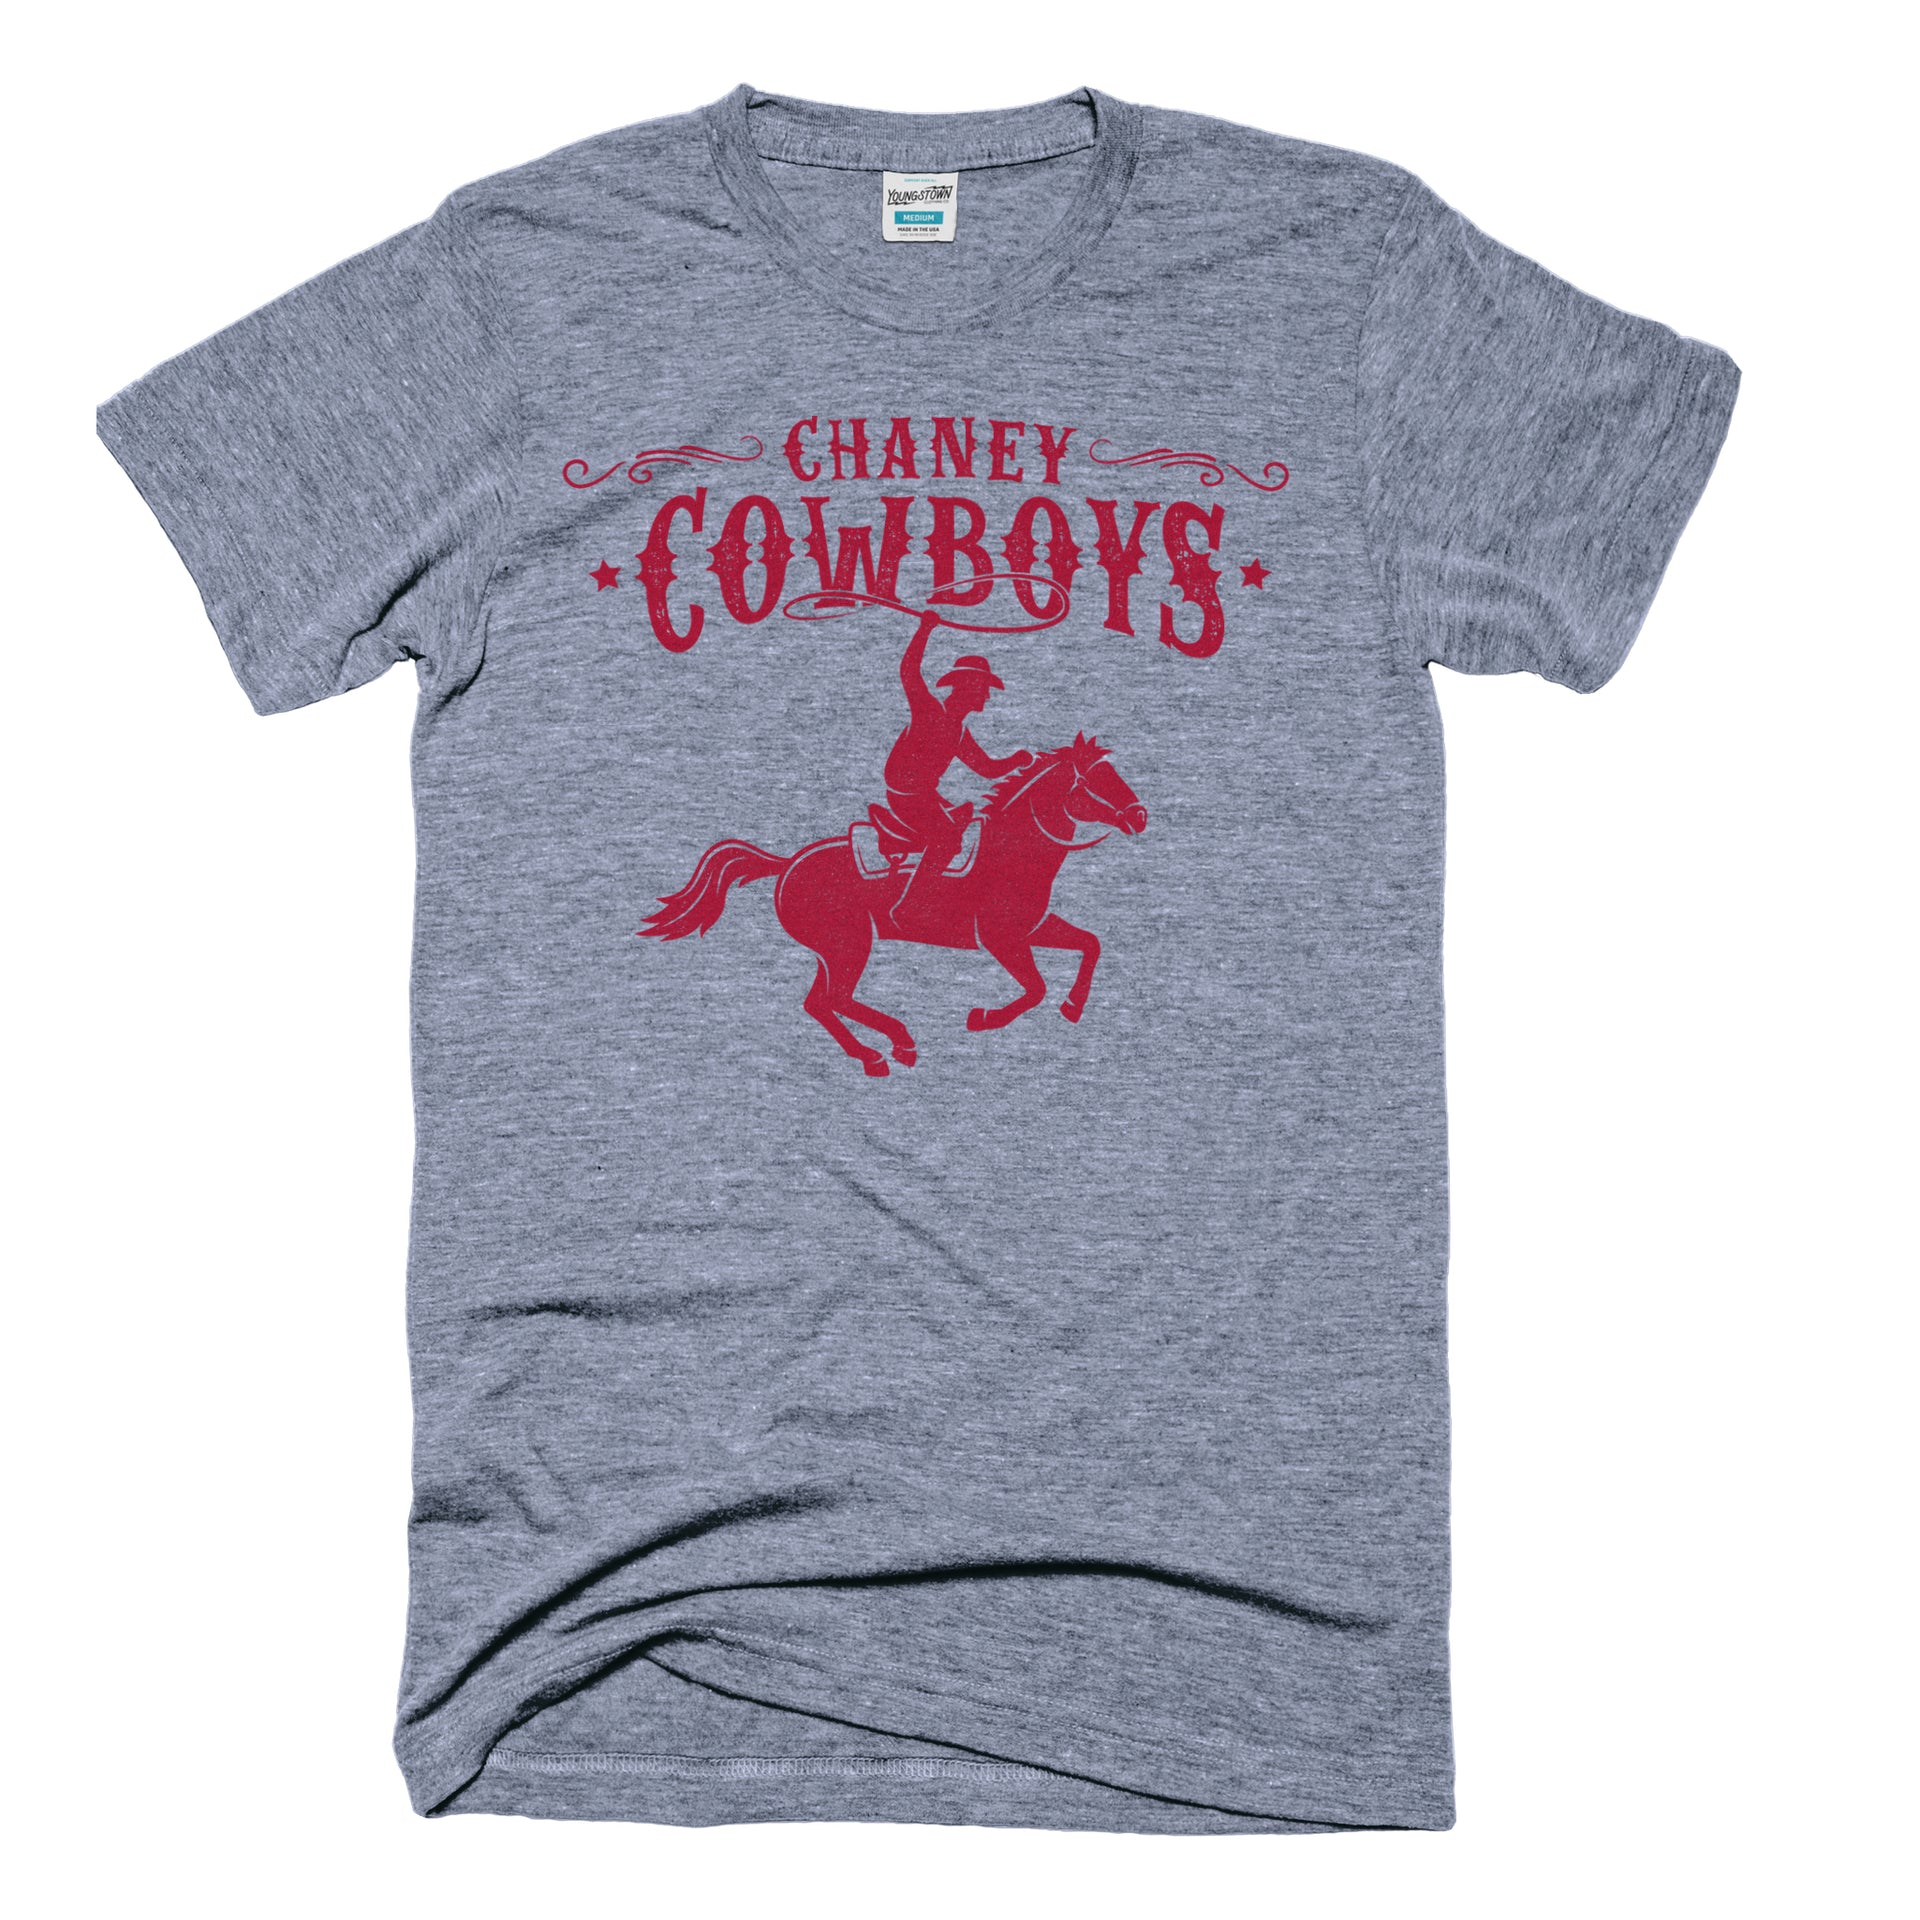 Chaney Cowboys T-Shirt